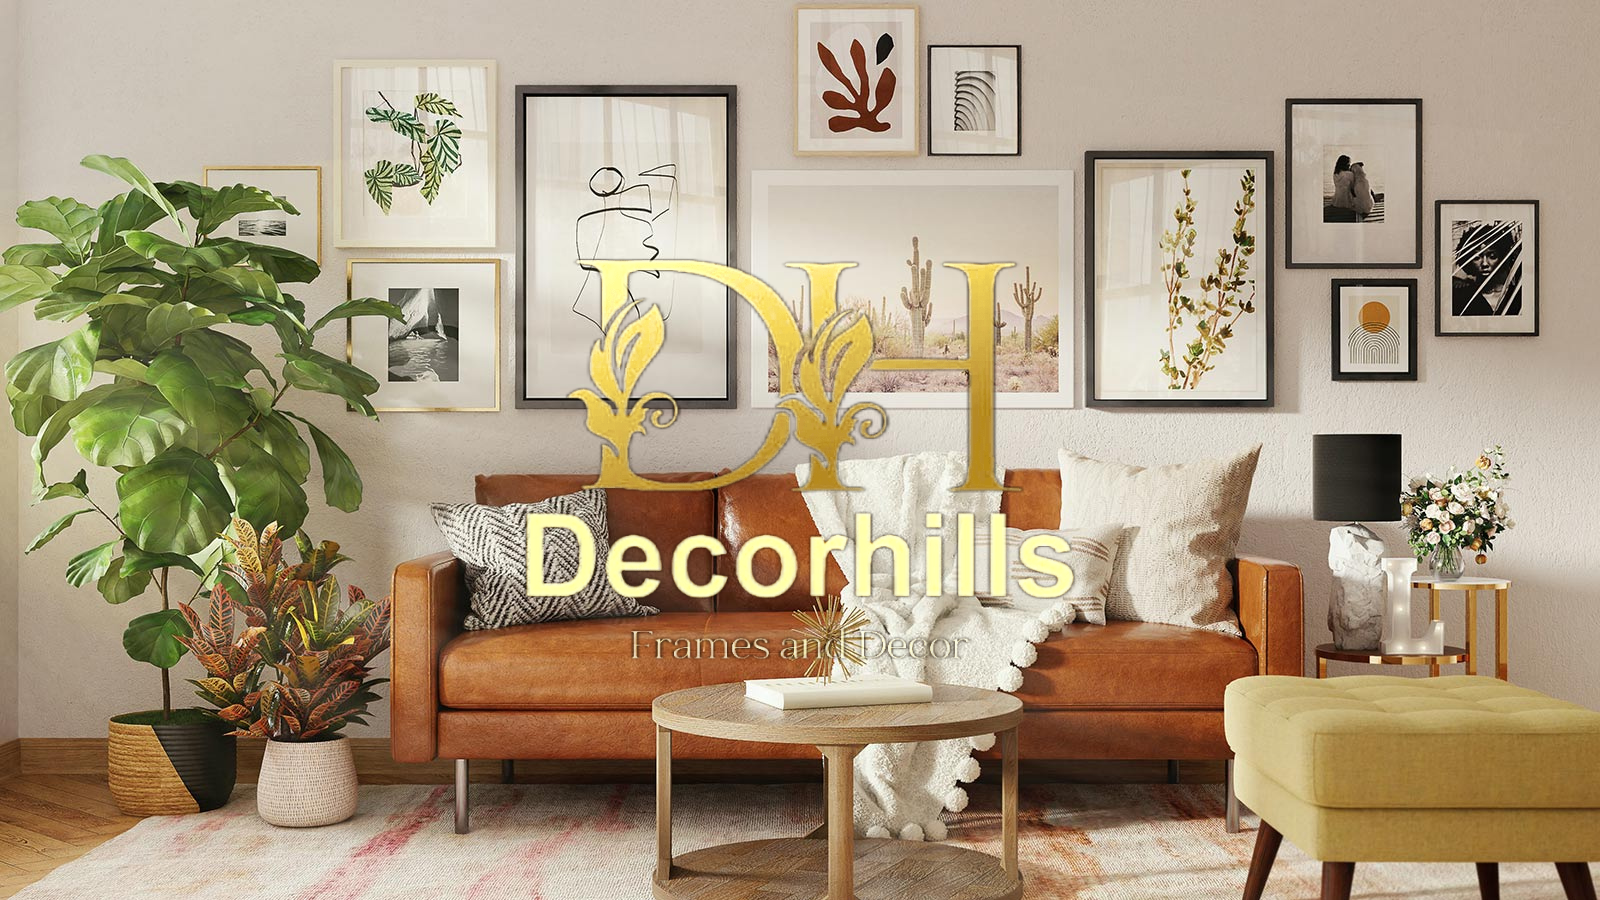 Decorhills Home Decor